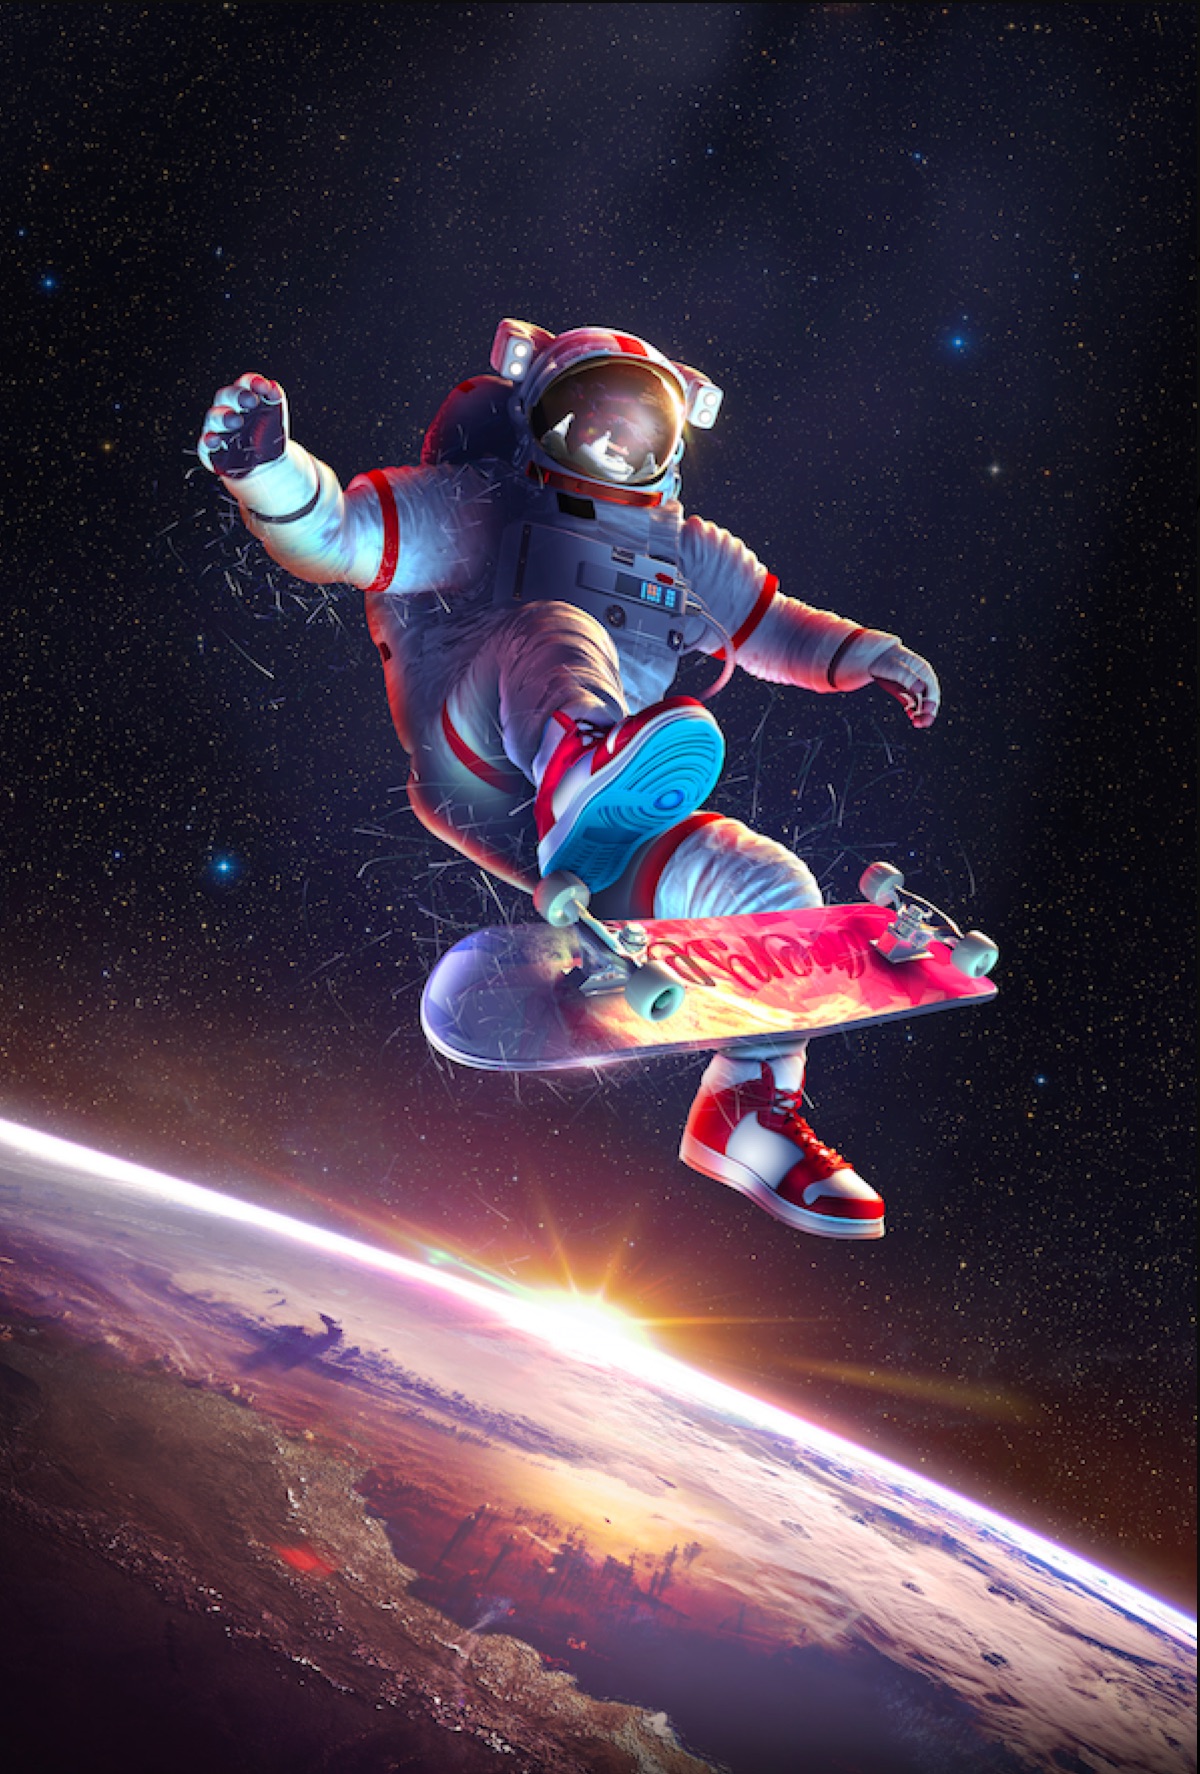 lynx cool space art poster of astronaut skateboarding